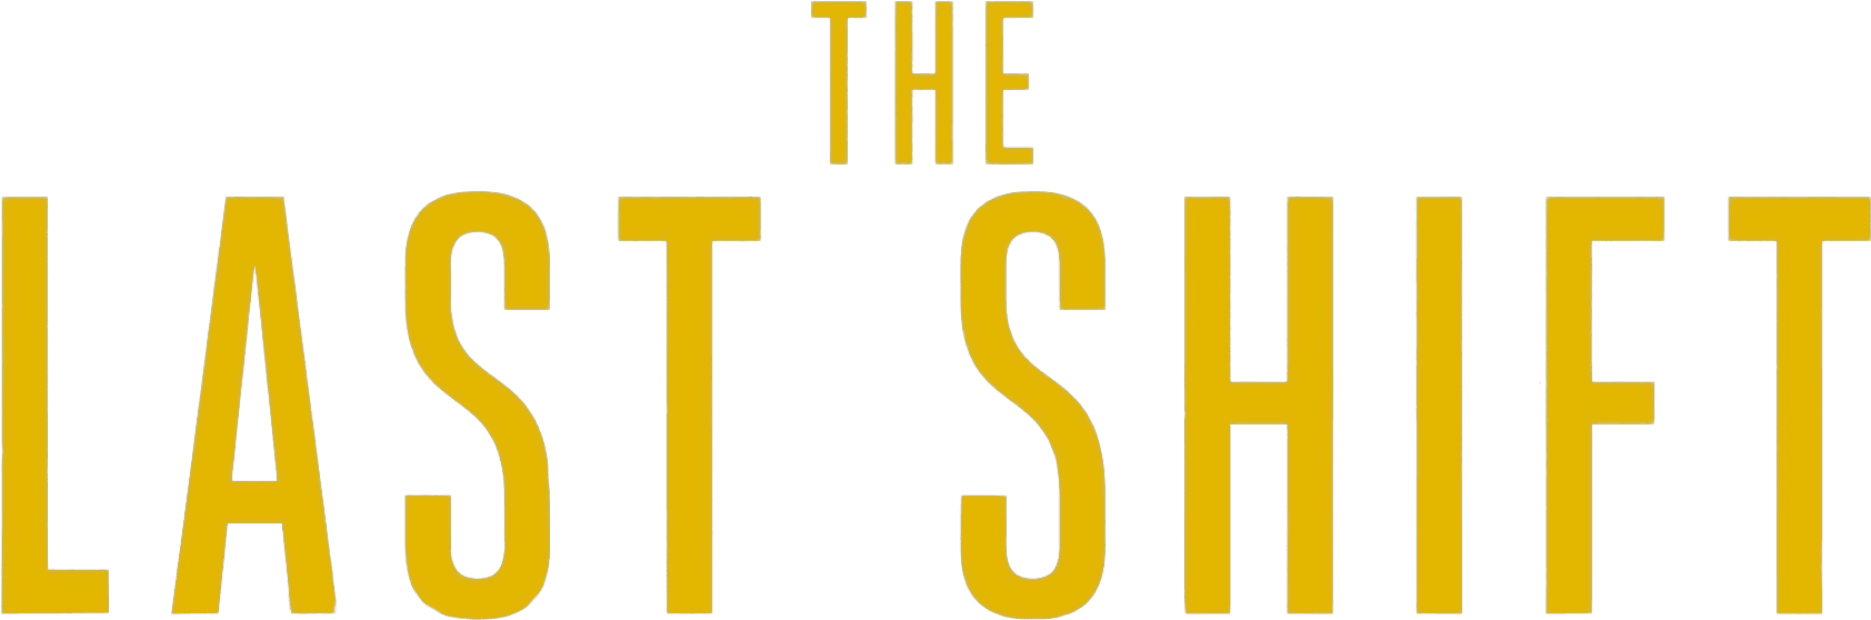 The Last Shift logo